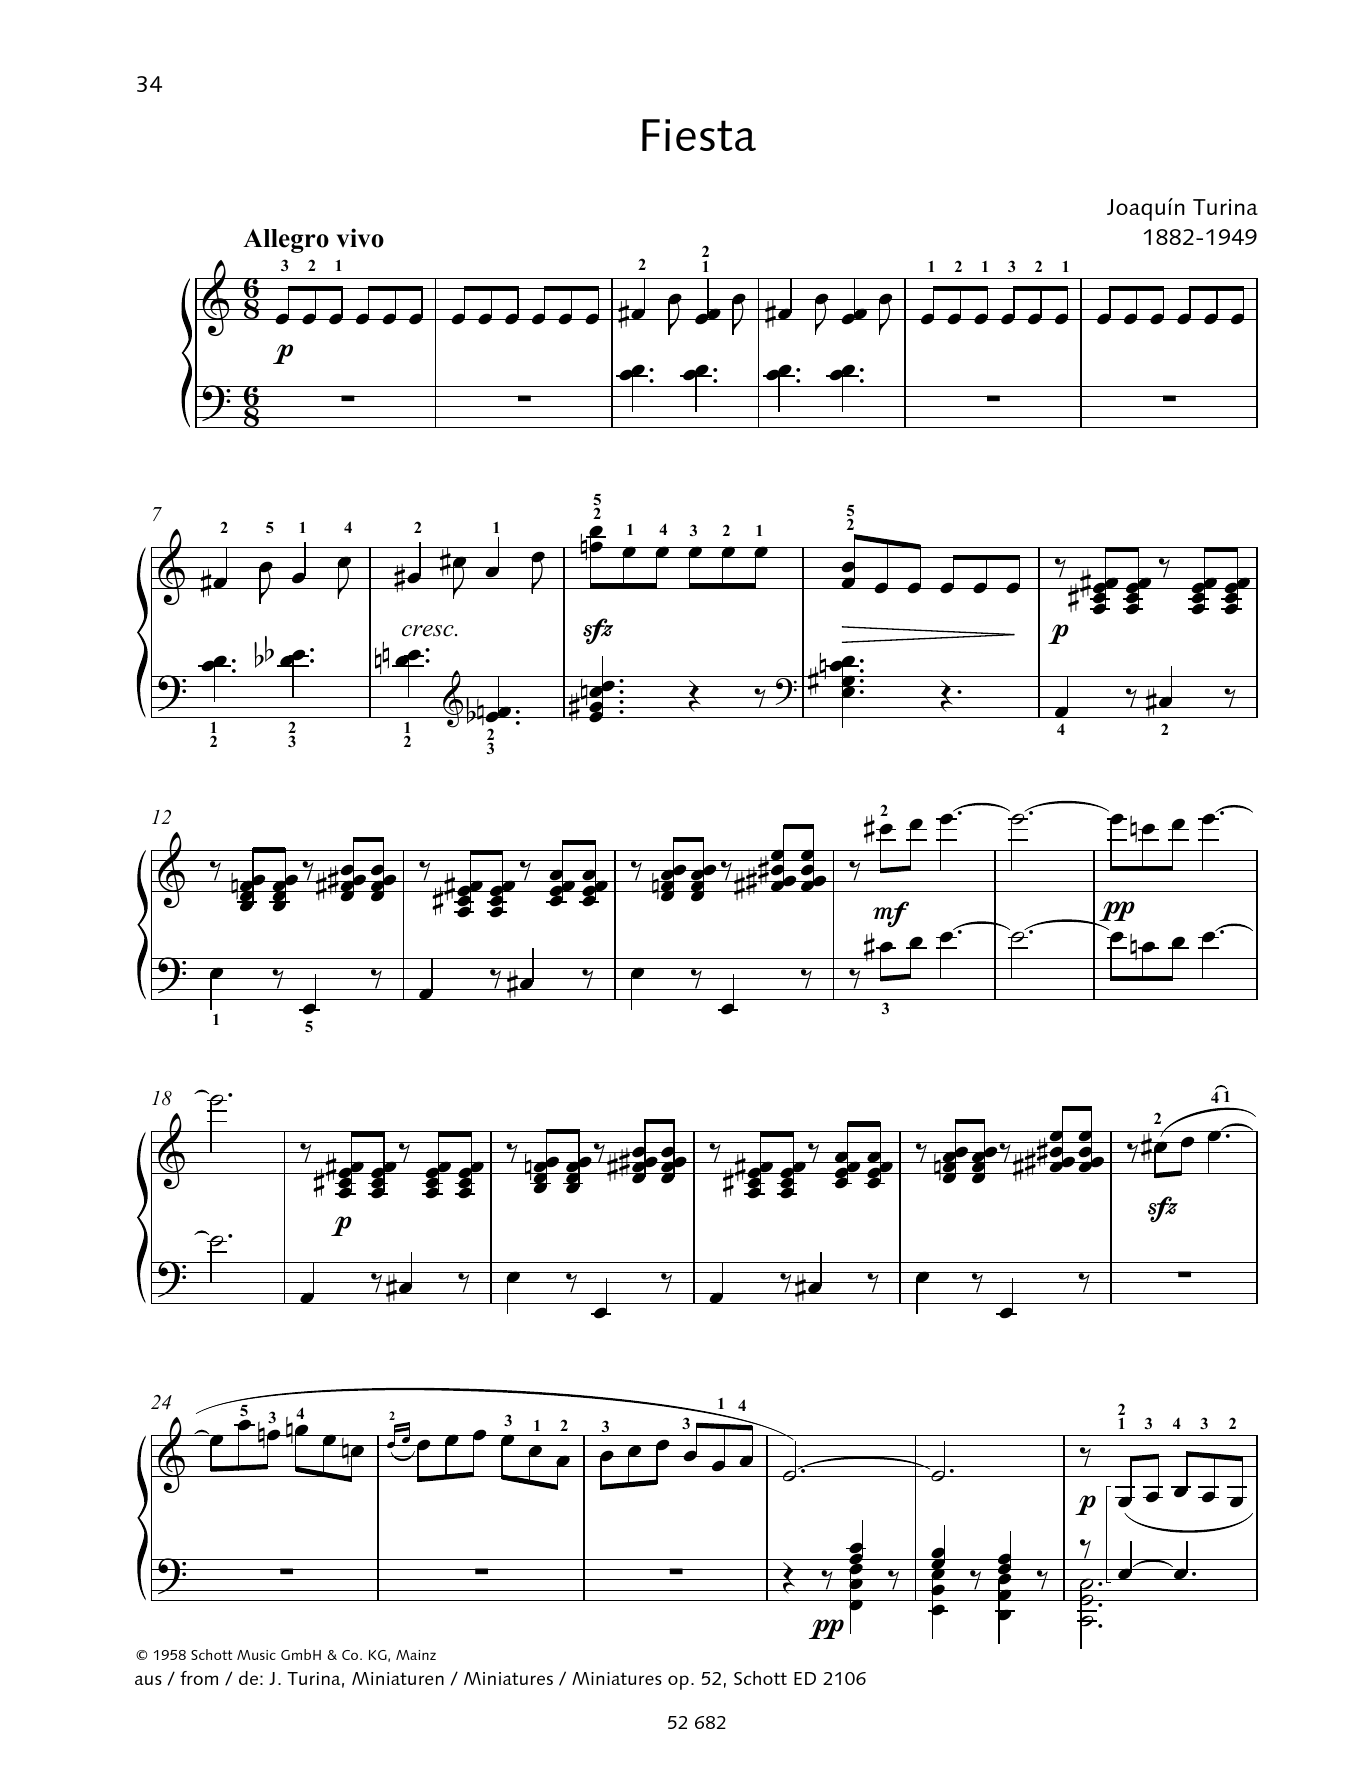 Joaquín Turina Fiesta Sheet Music Notes & Chords for Piano Solo - Download or Print PDF